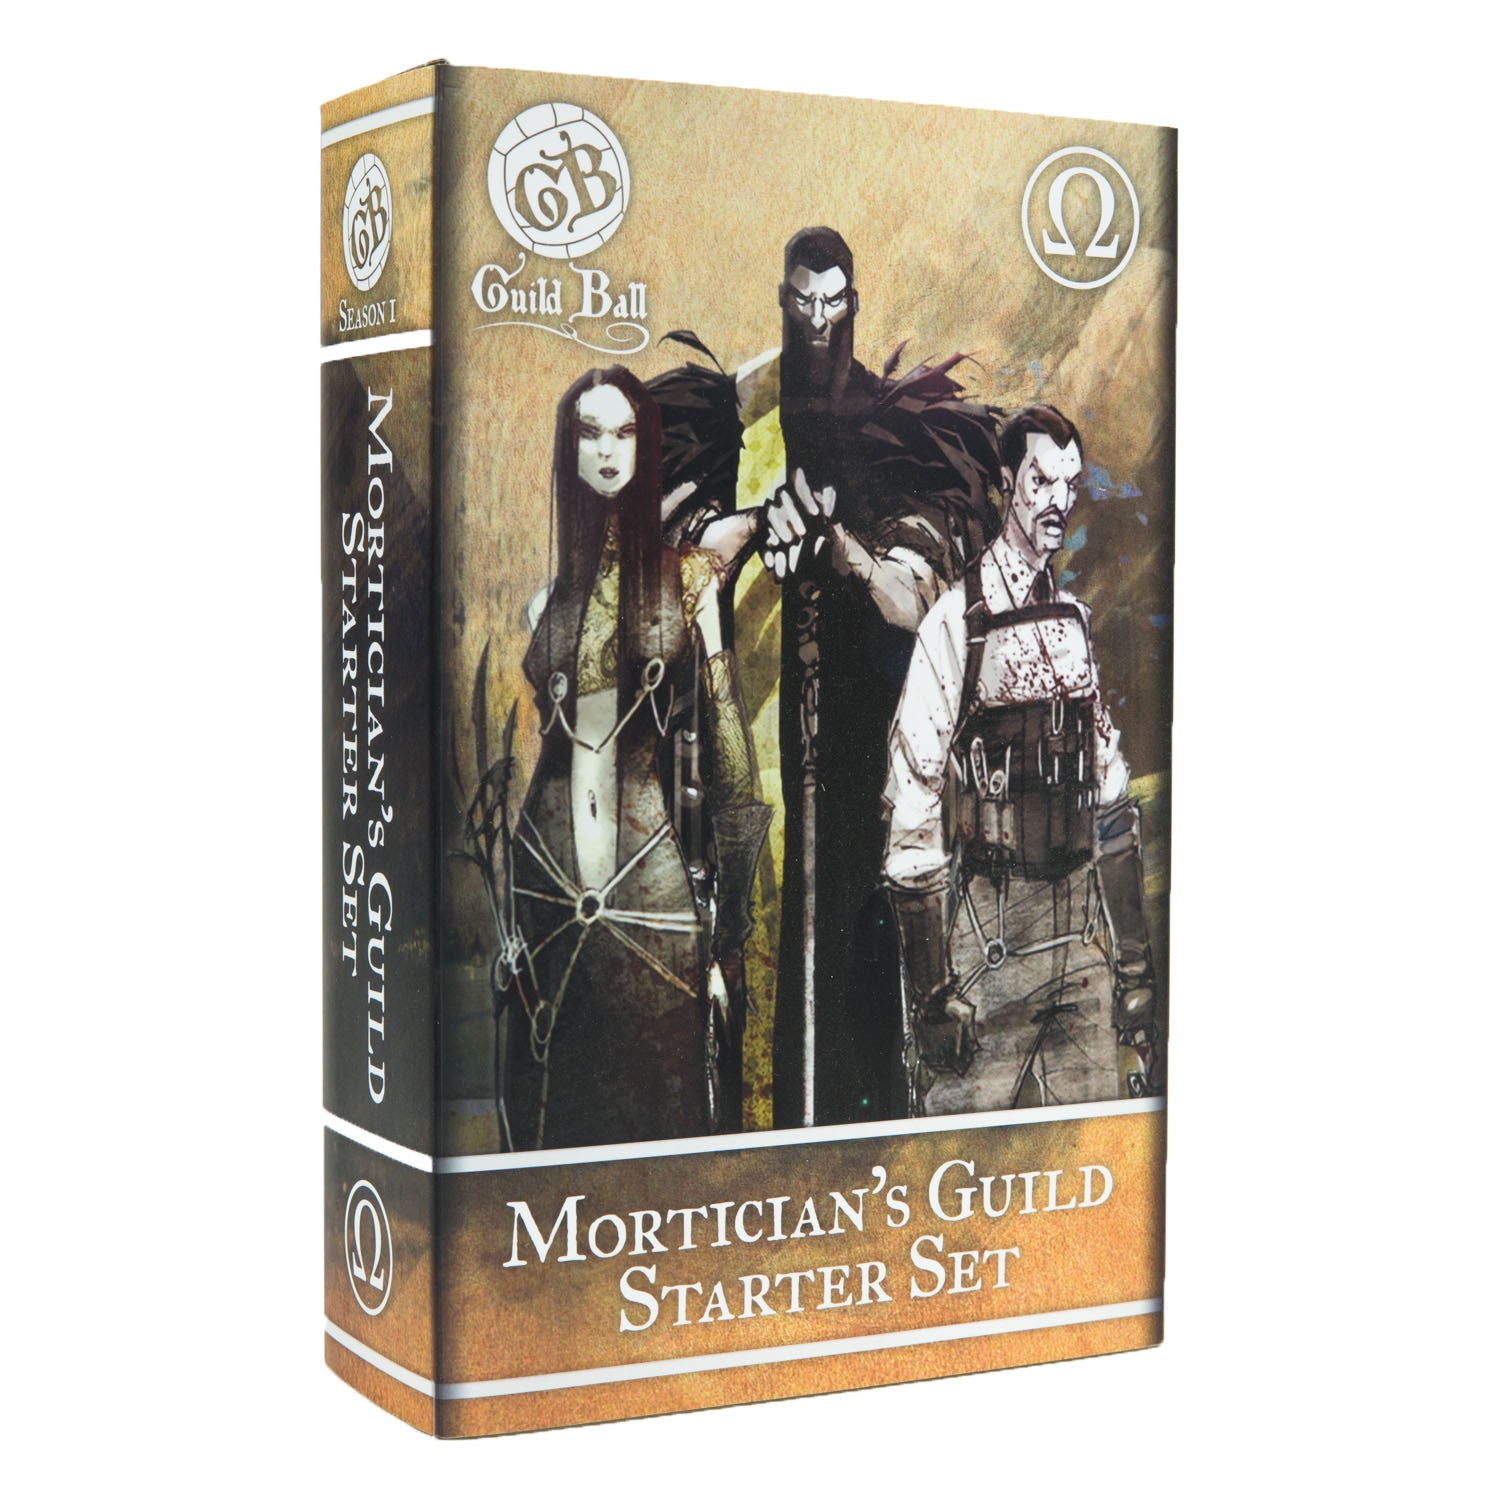 Guild Ball: Mortician's Guild Starter Set